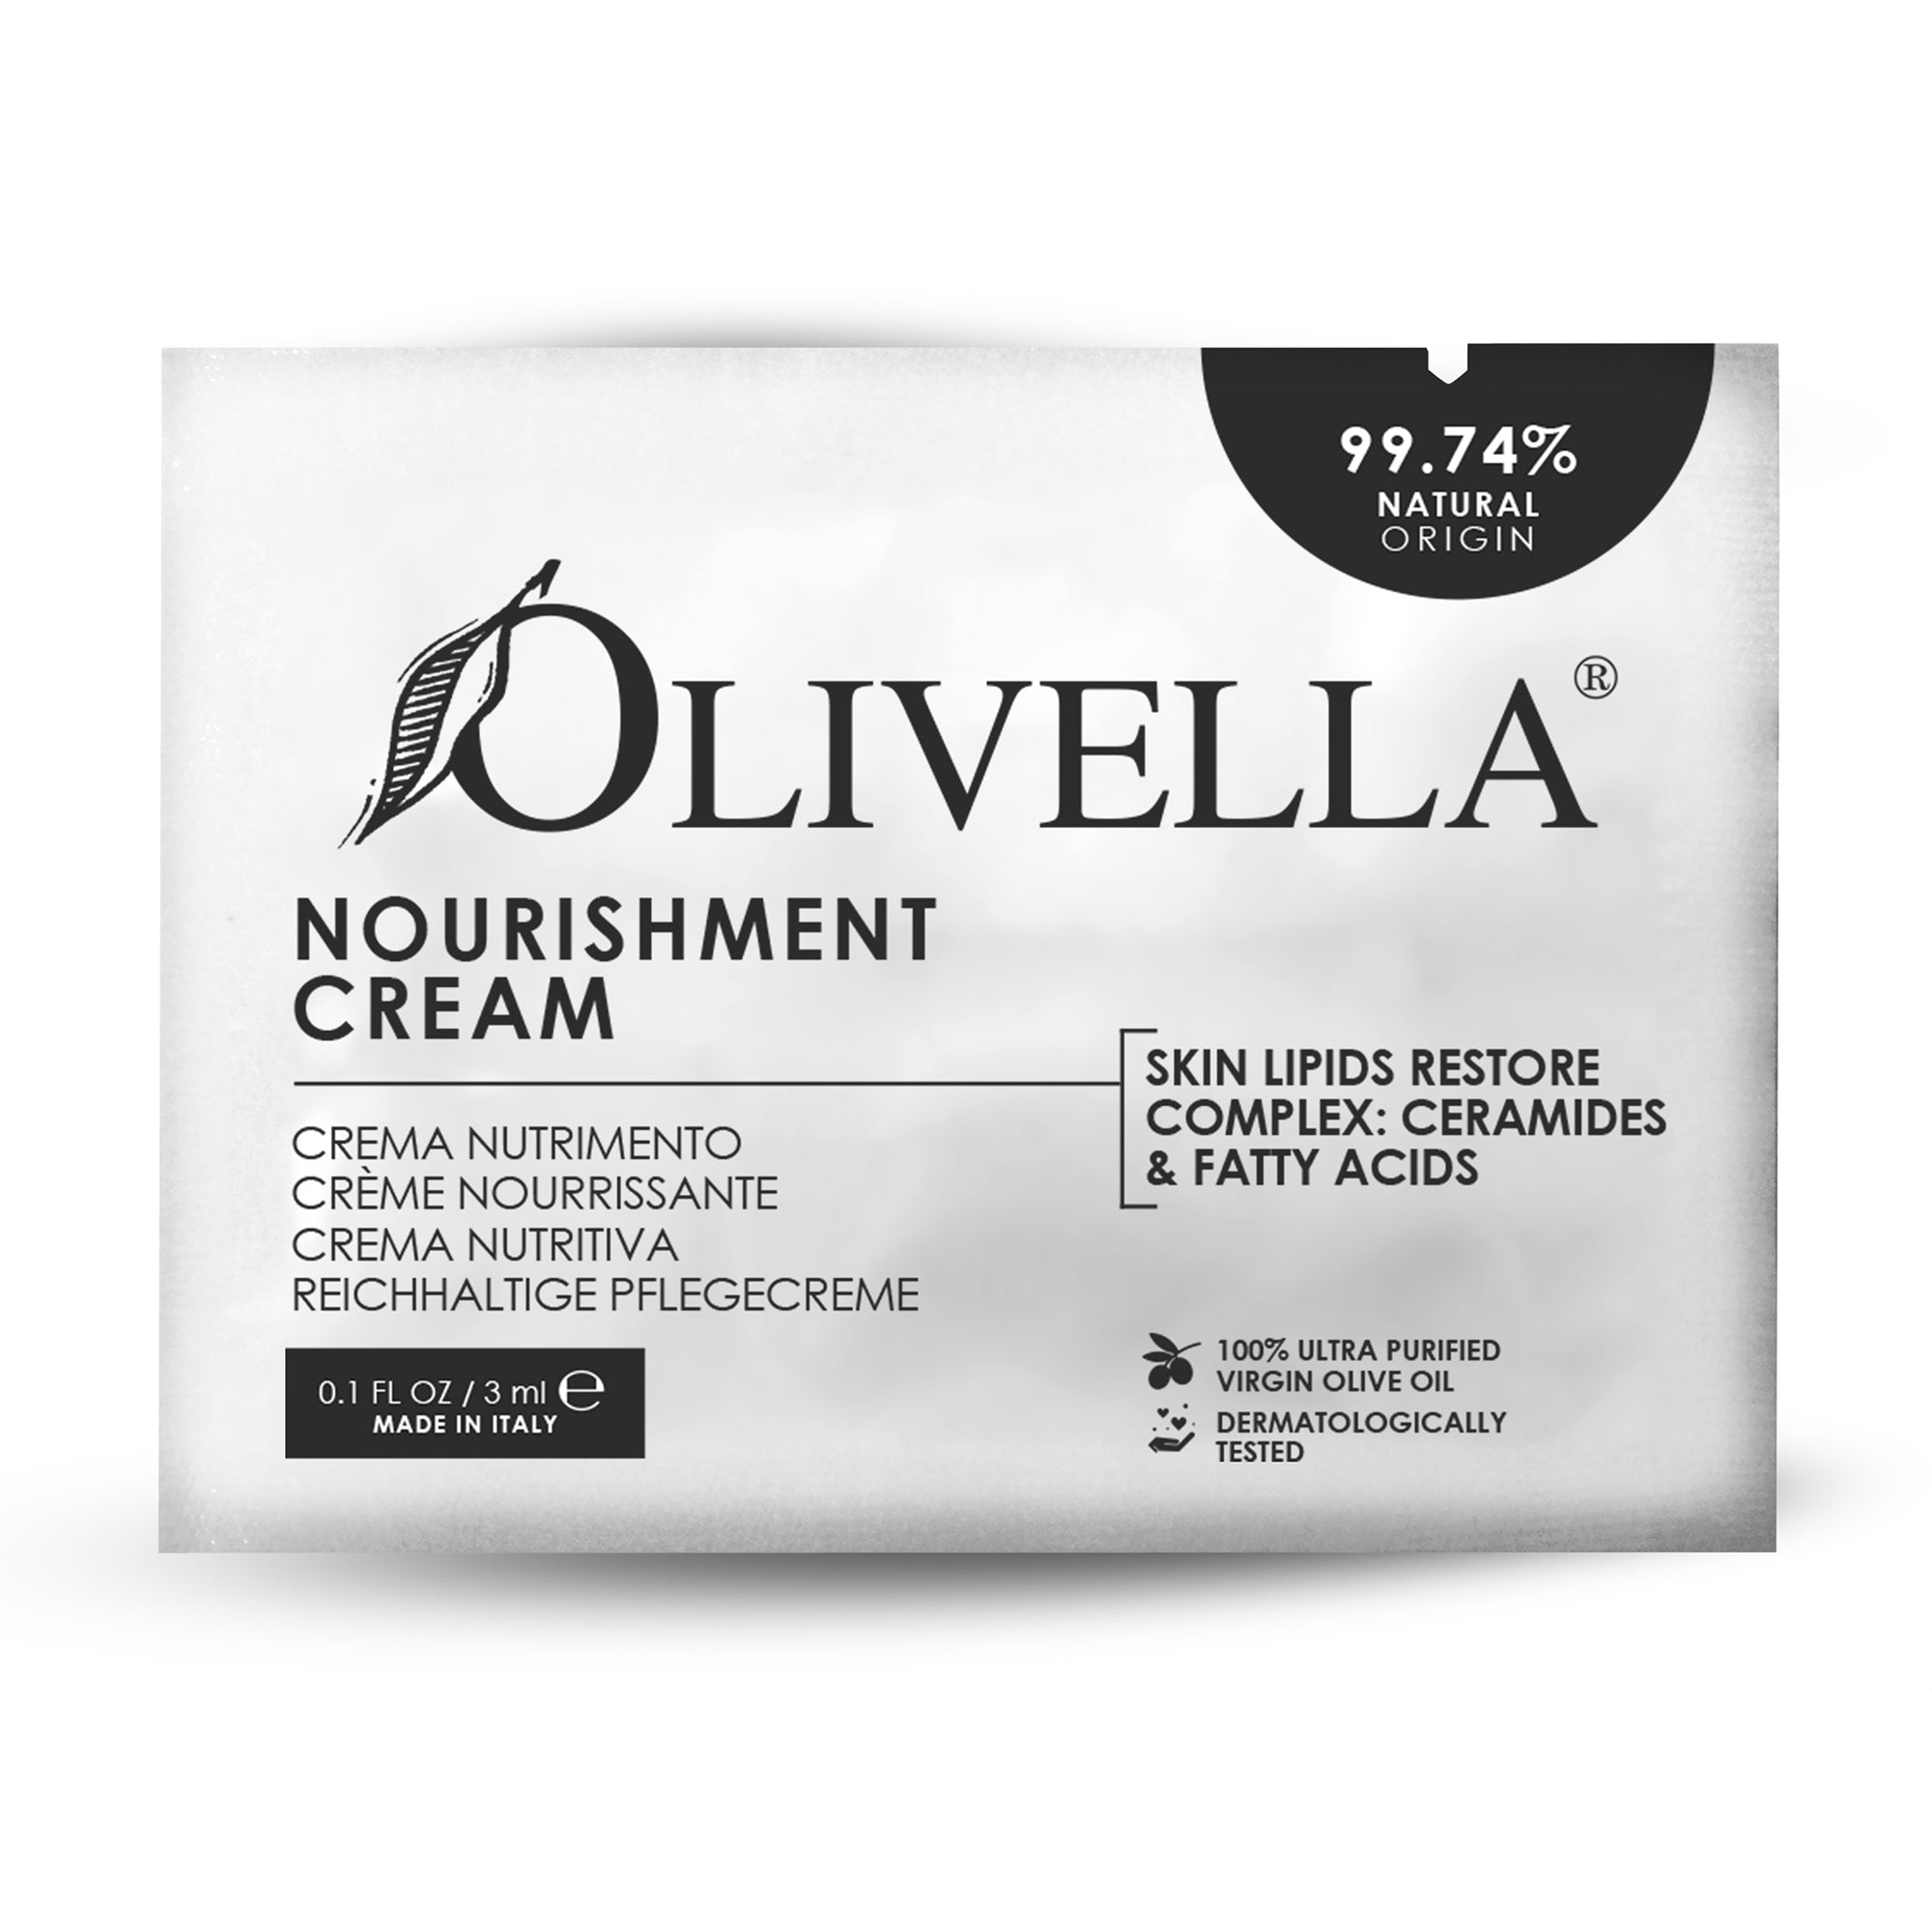 Olivella Nourishment Cream Sample